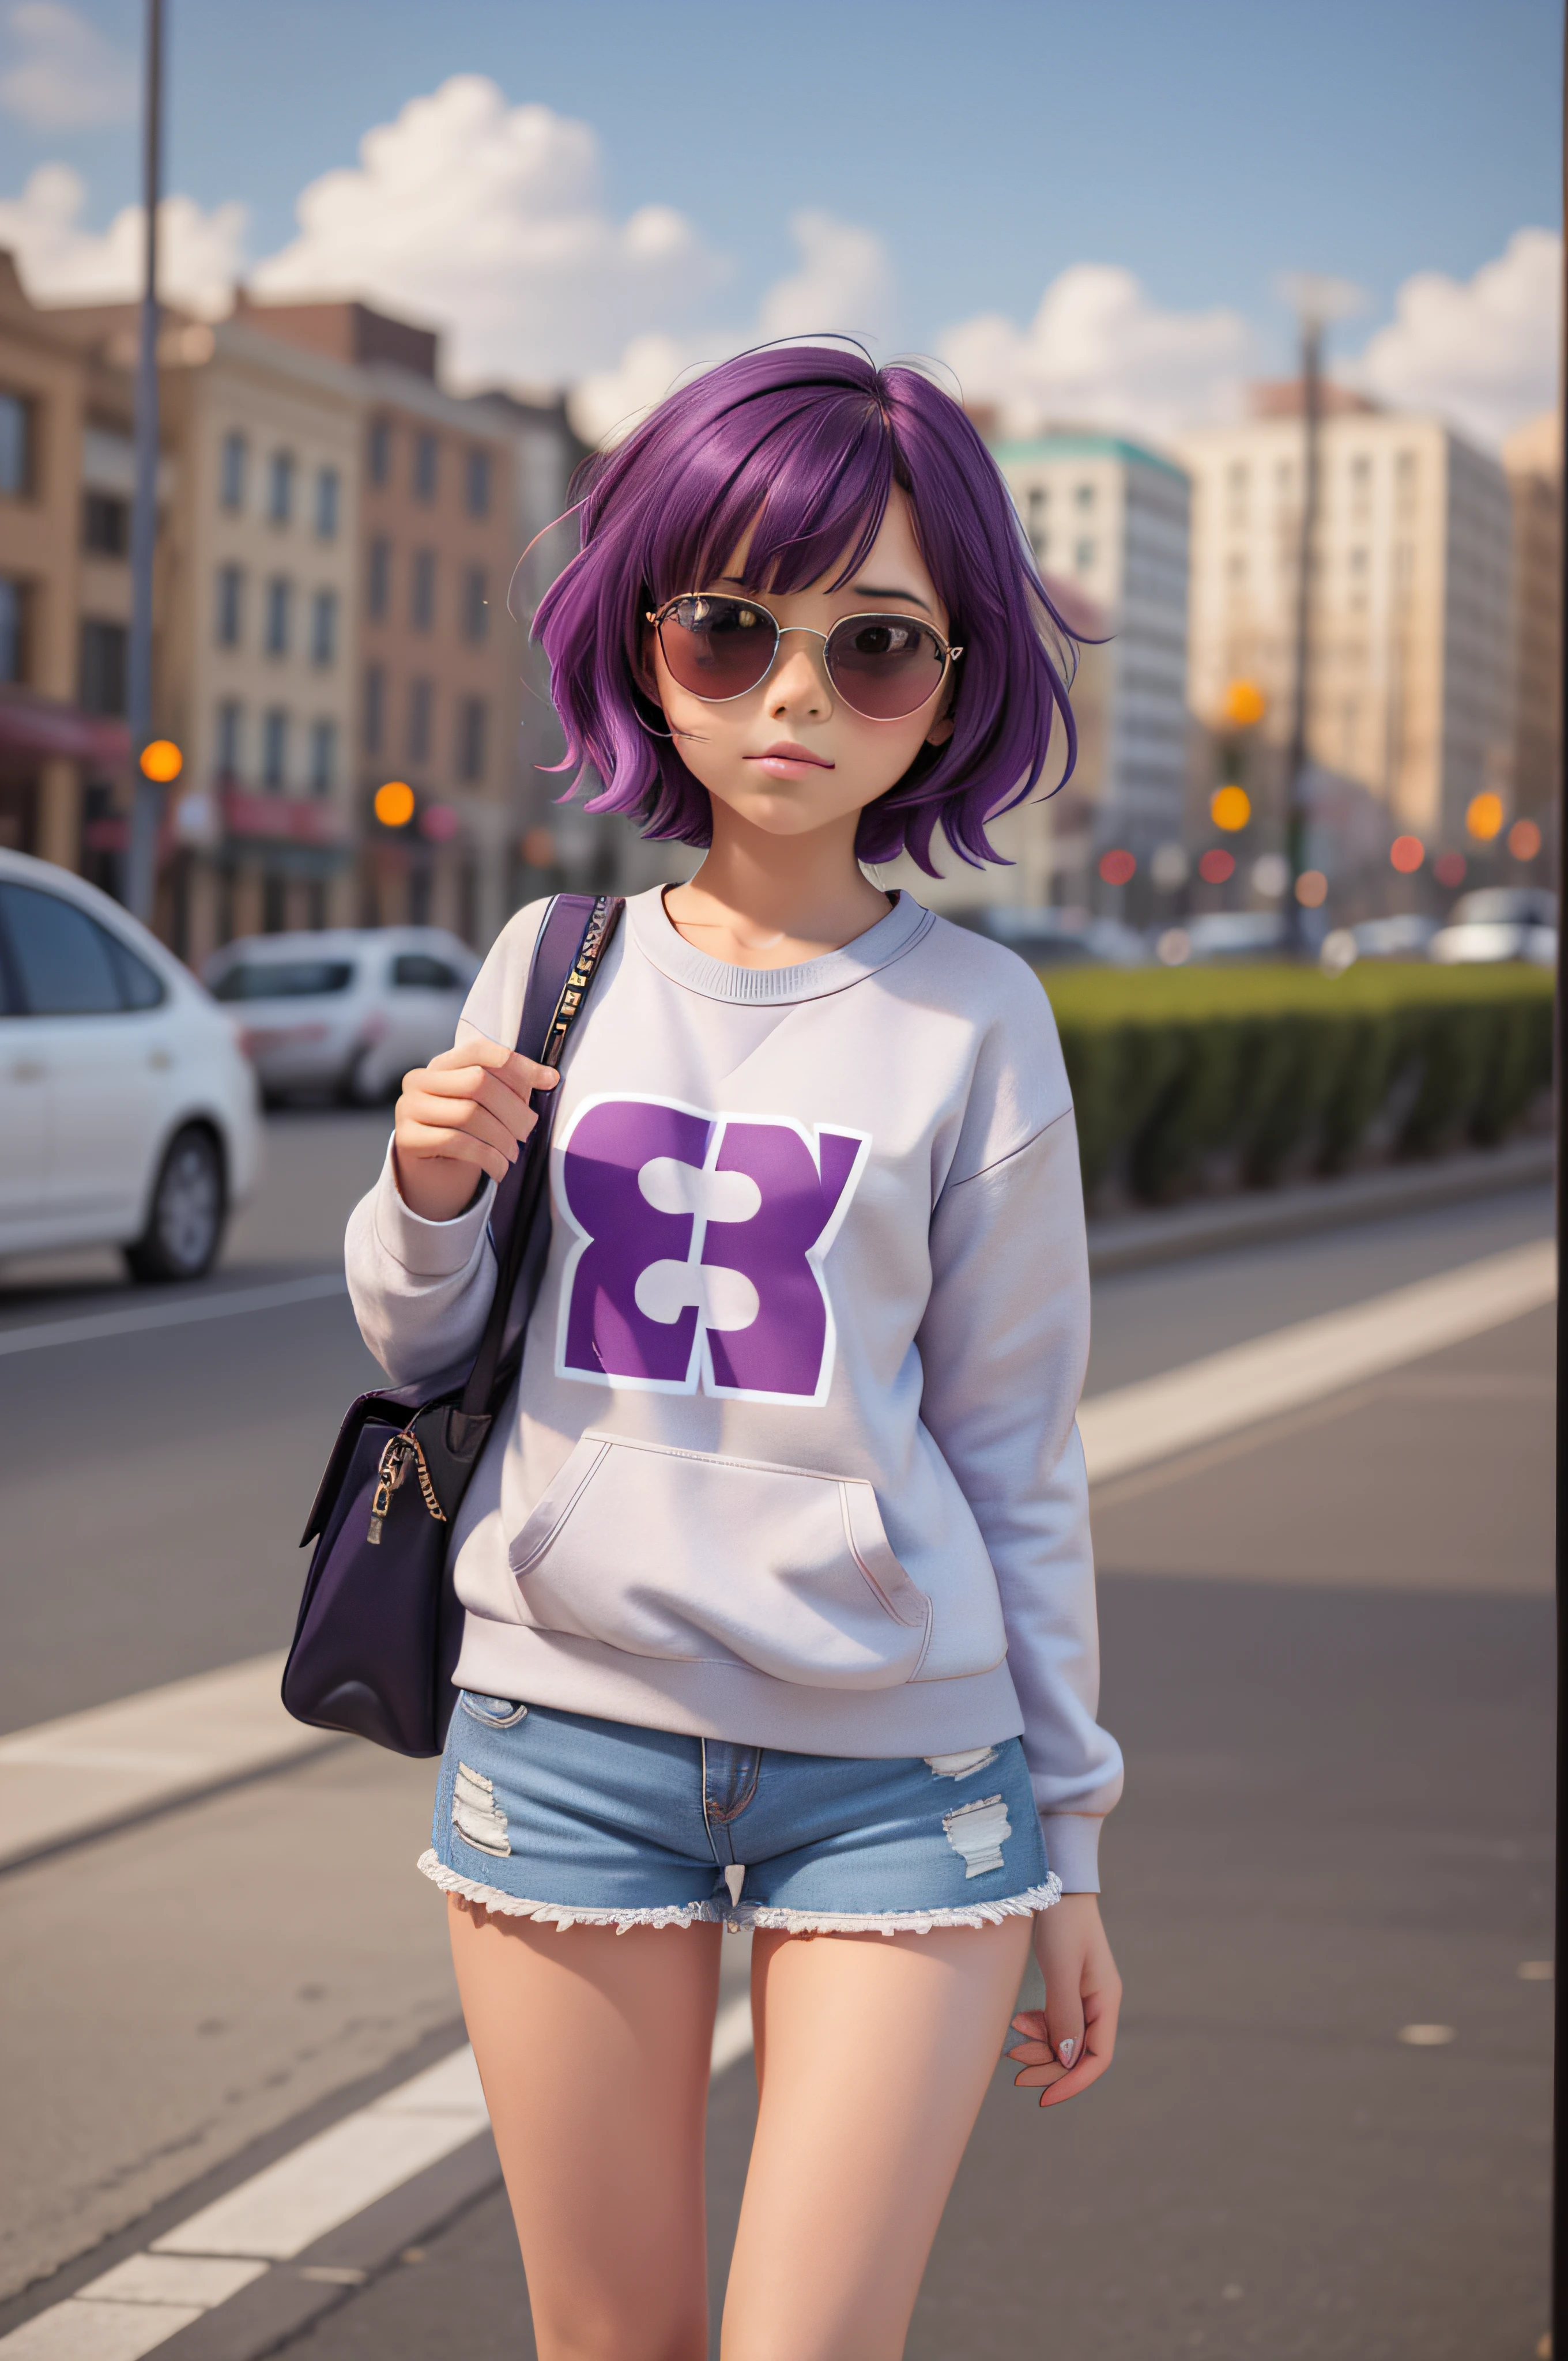 1 girl, 9 years old, short purple hair, short striped sweatshirt, short blue shorts, colored ribbon stuck in hair, sunglasses, city